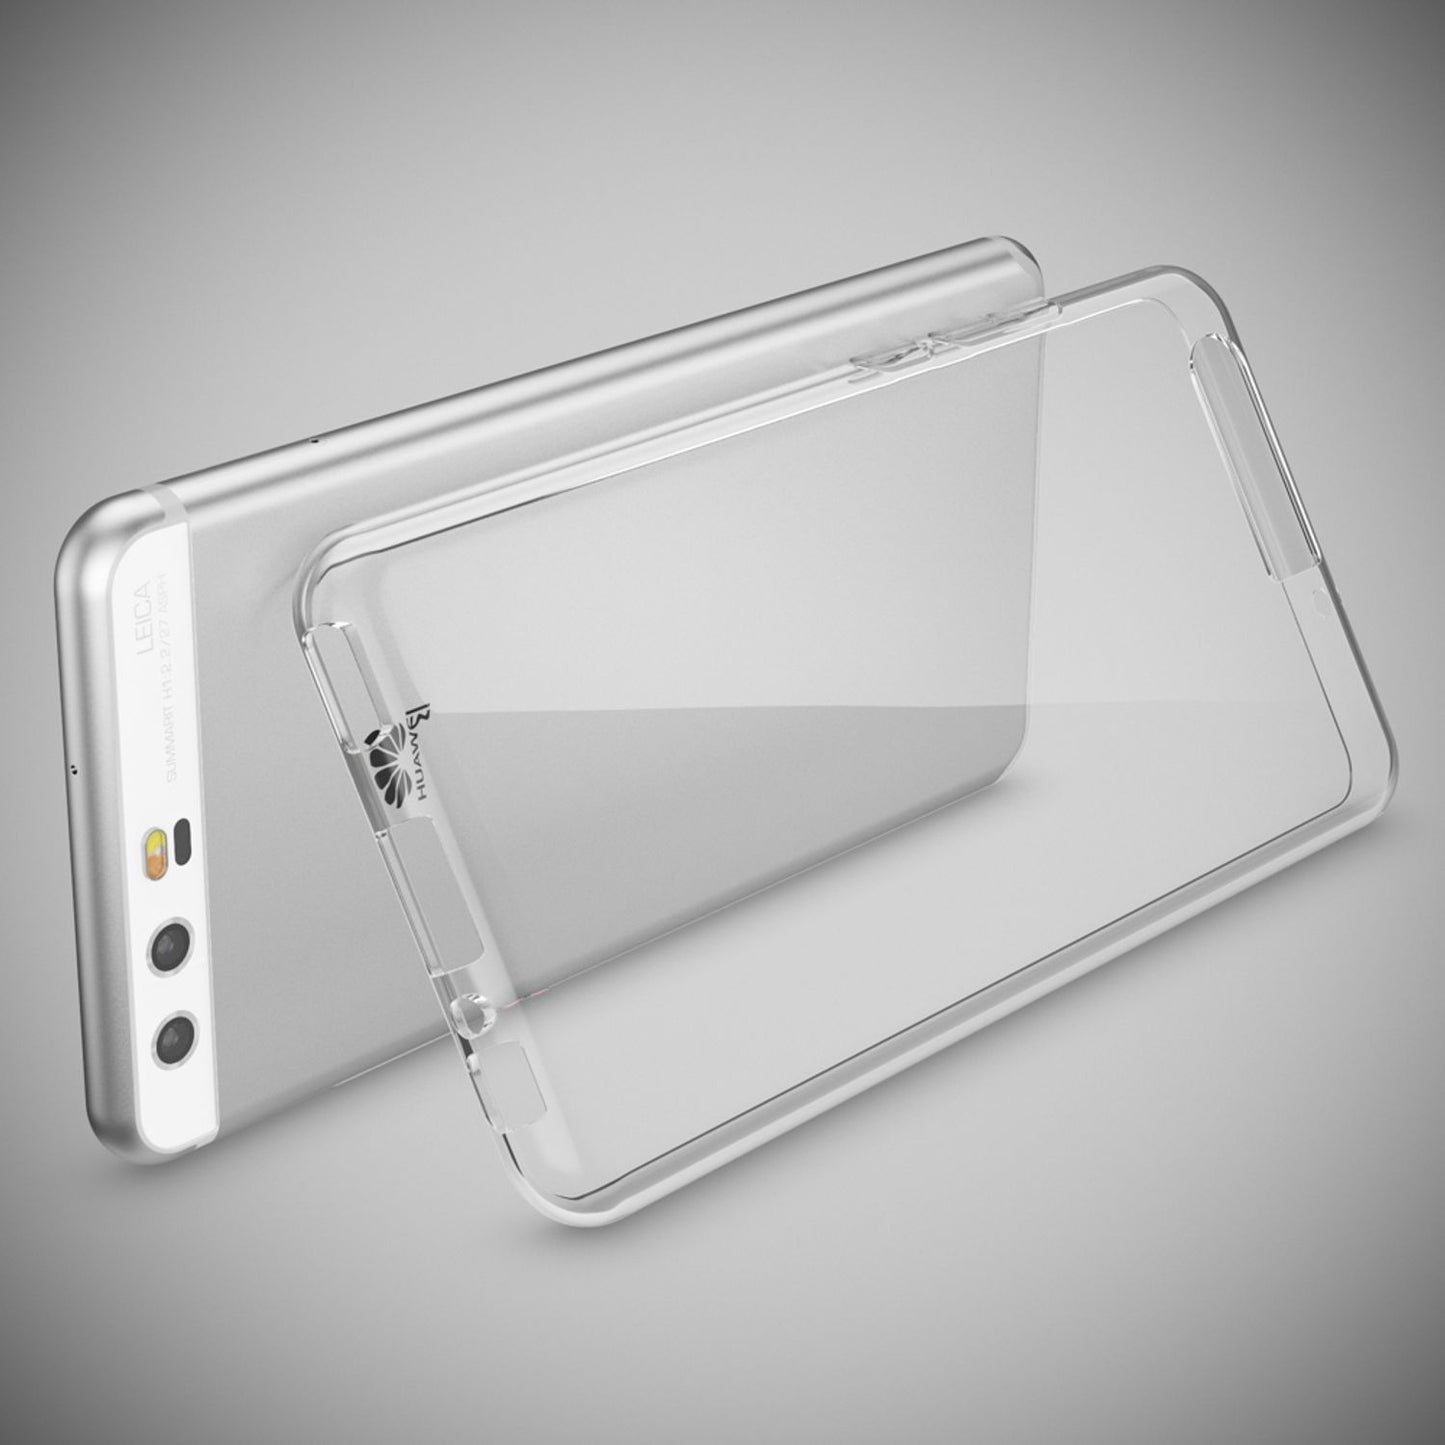 Huawei P10 Handy Hülle von NALIA Case Cover Transparent Schutzhülle Bumper Tasche